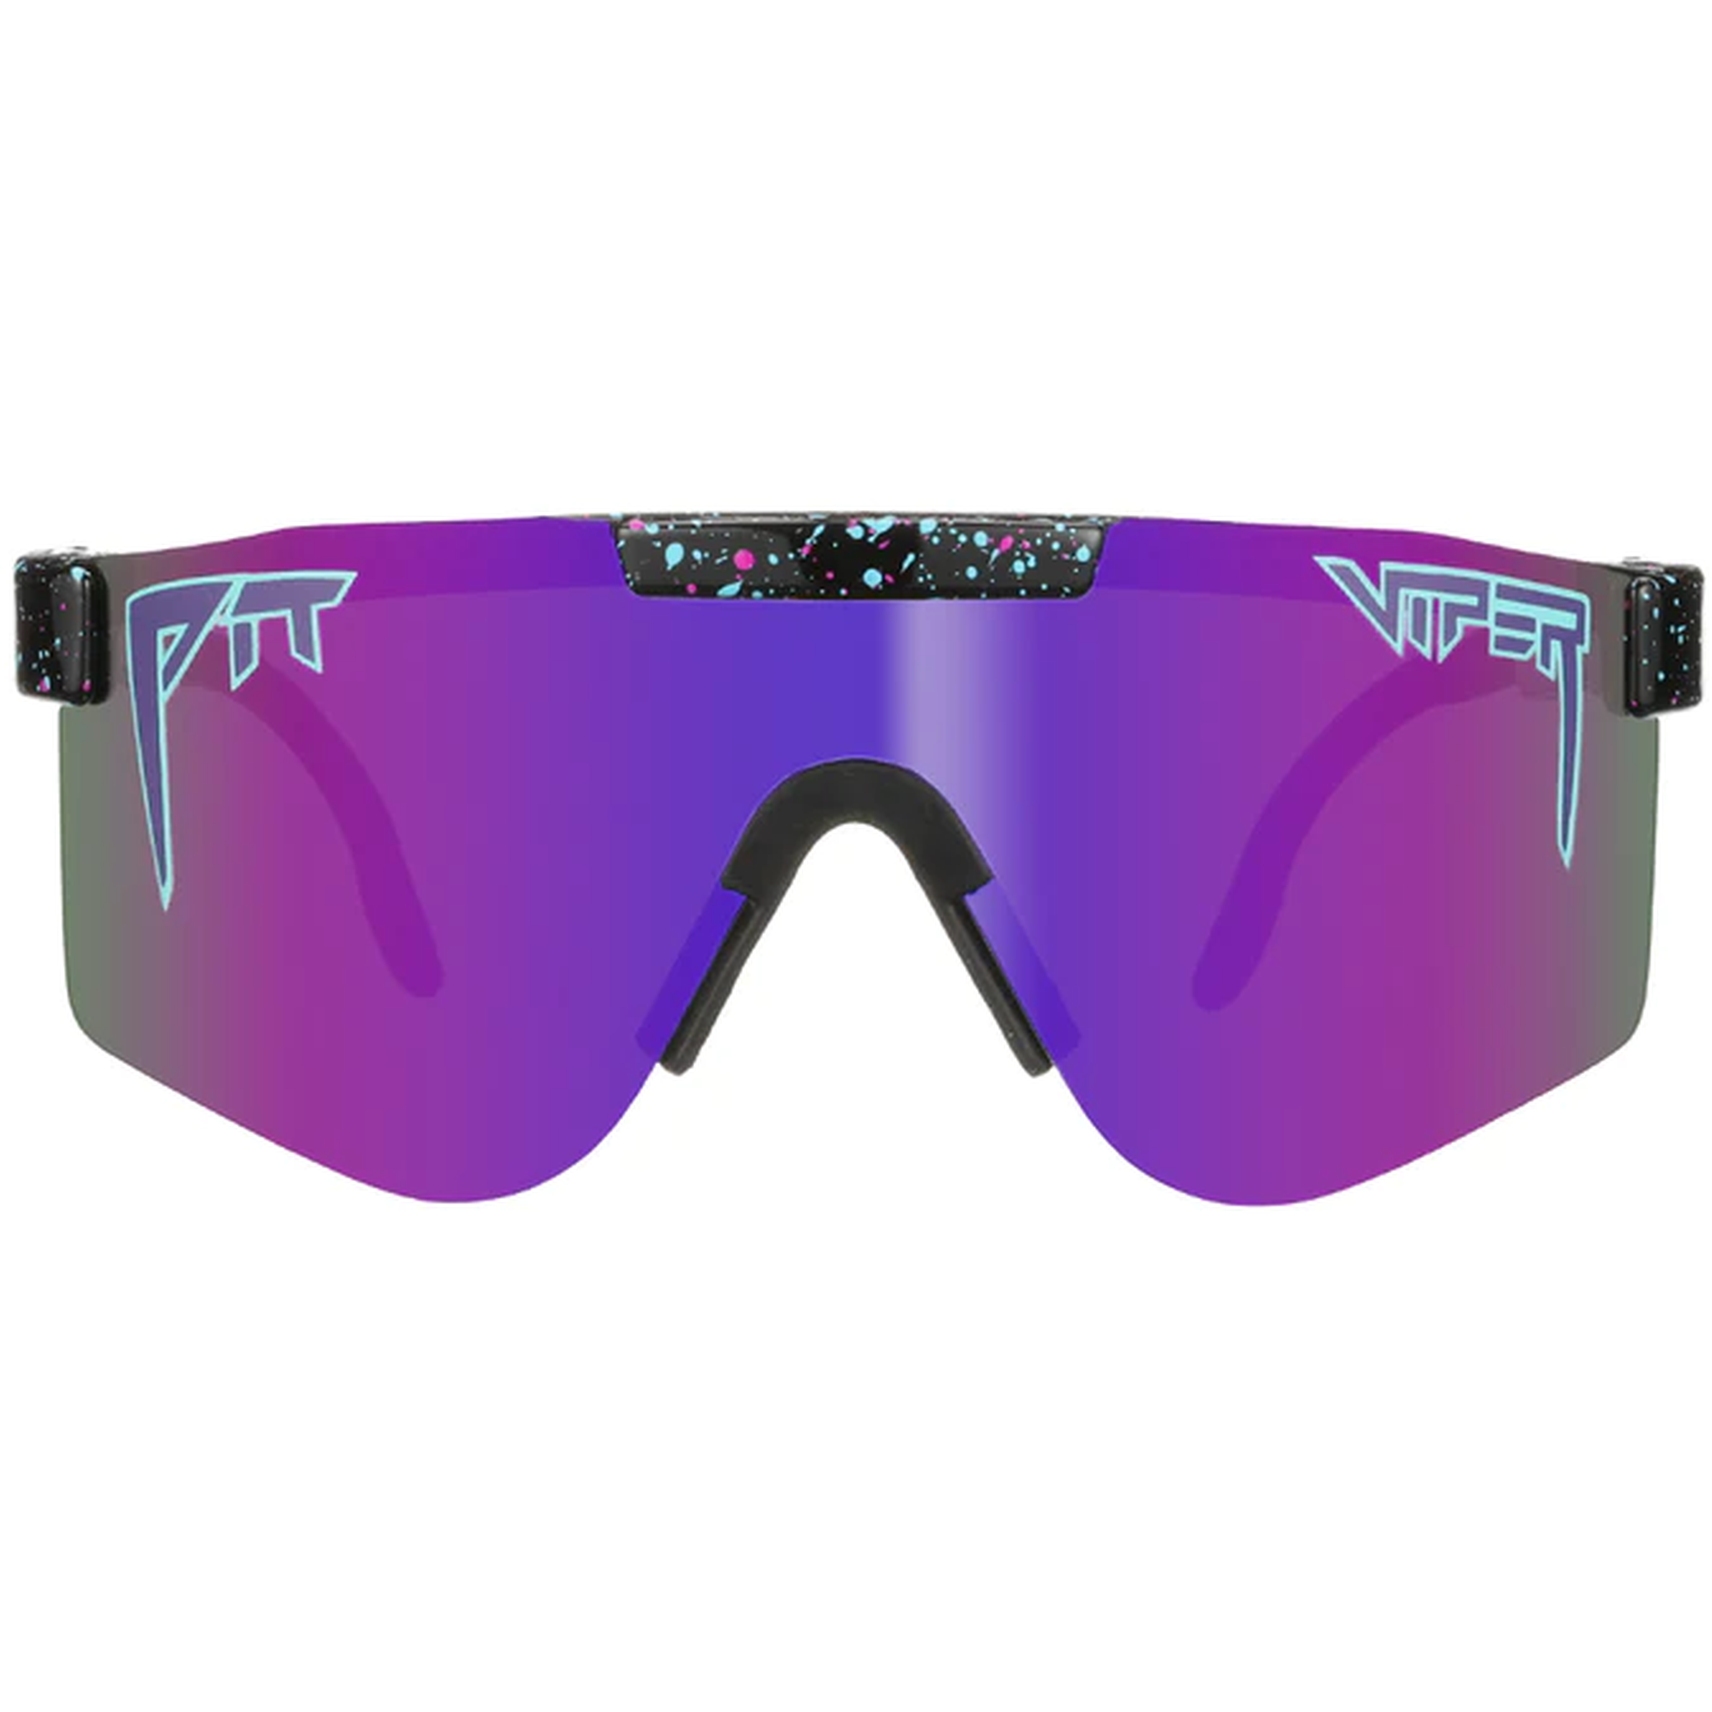 Productfoto van Pit Viper The Originals Glasses - Double Wide - The Night Fall / Polarized Purple Mirror